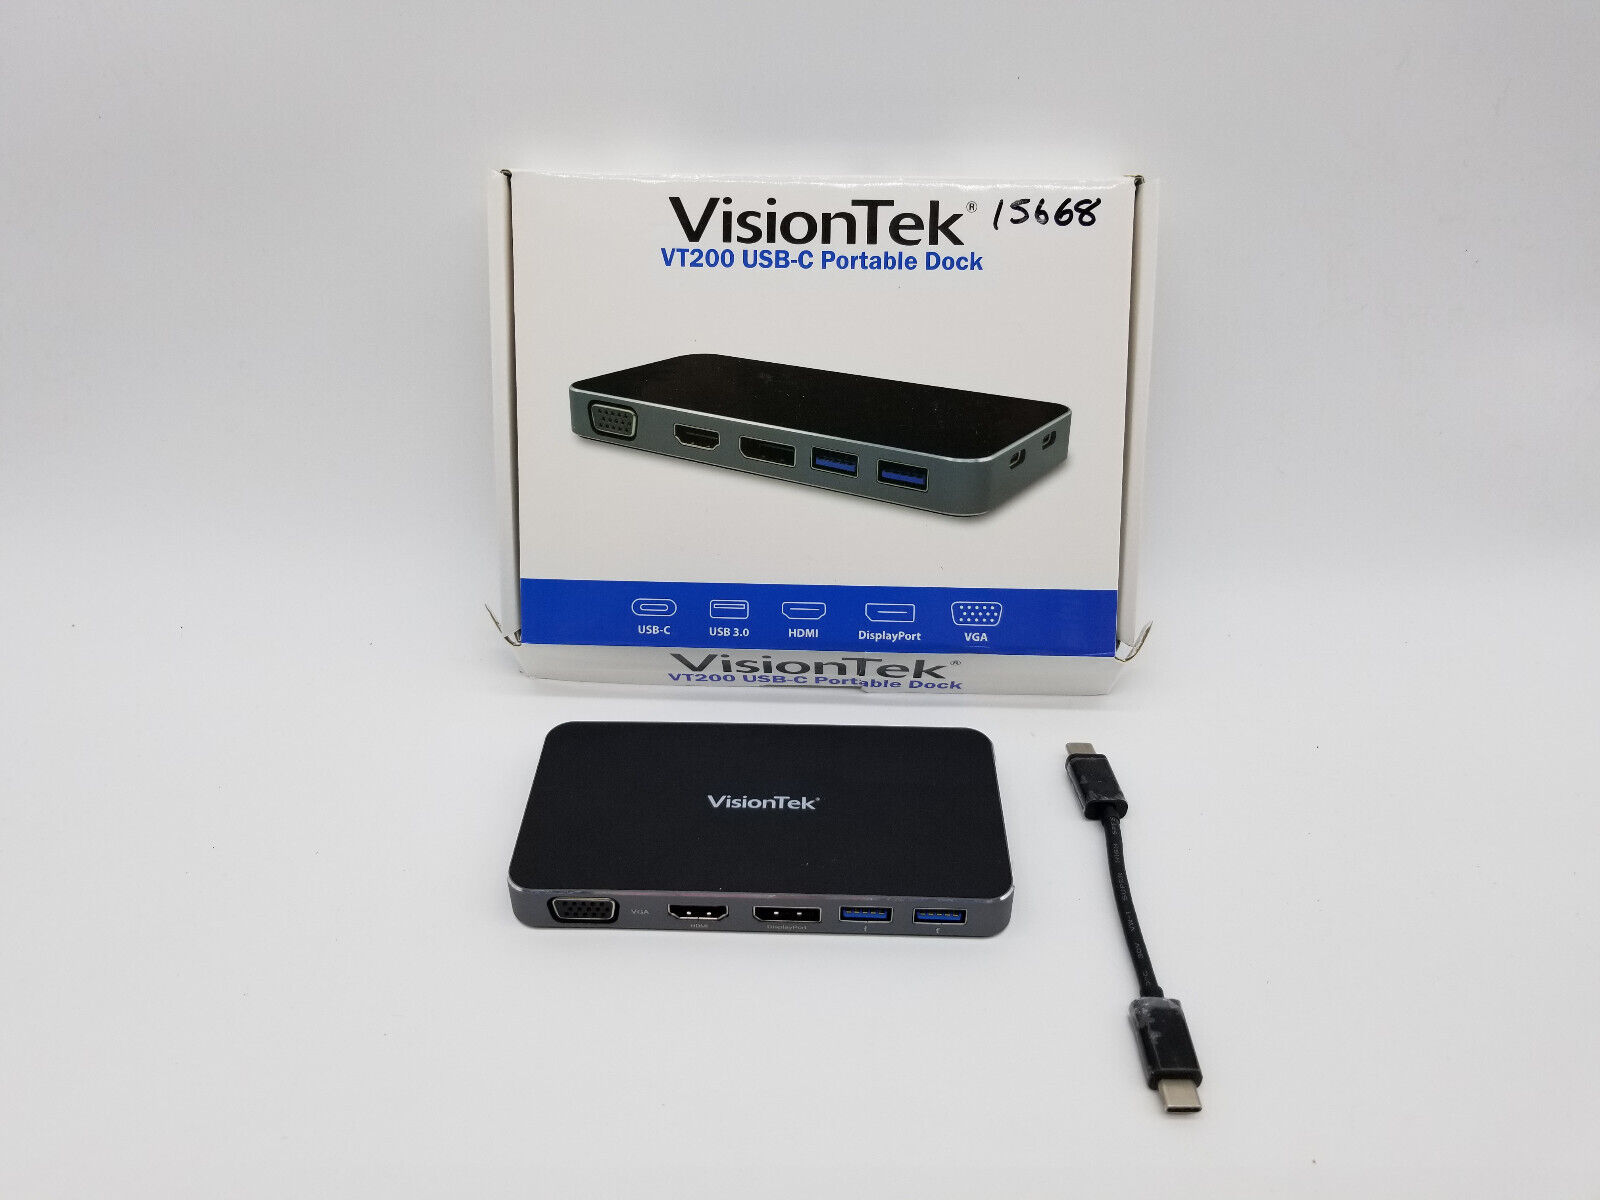 VisionTek VT200 USB-C Portable Dock